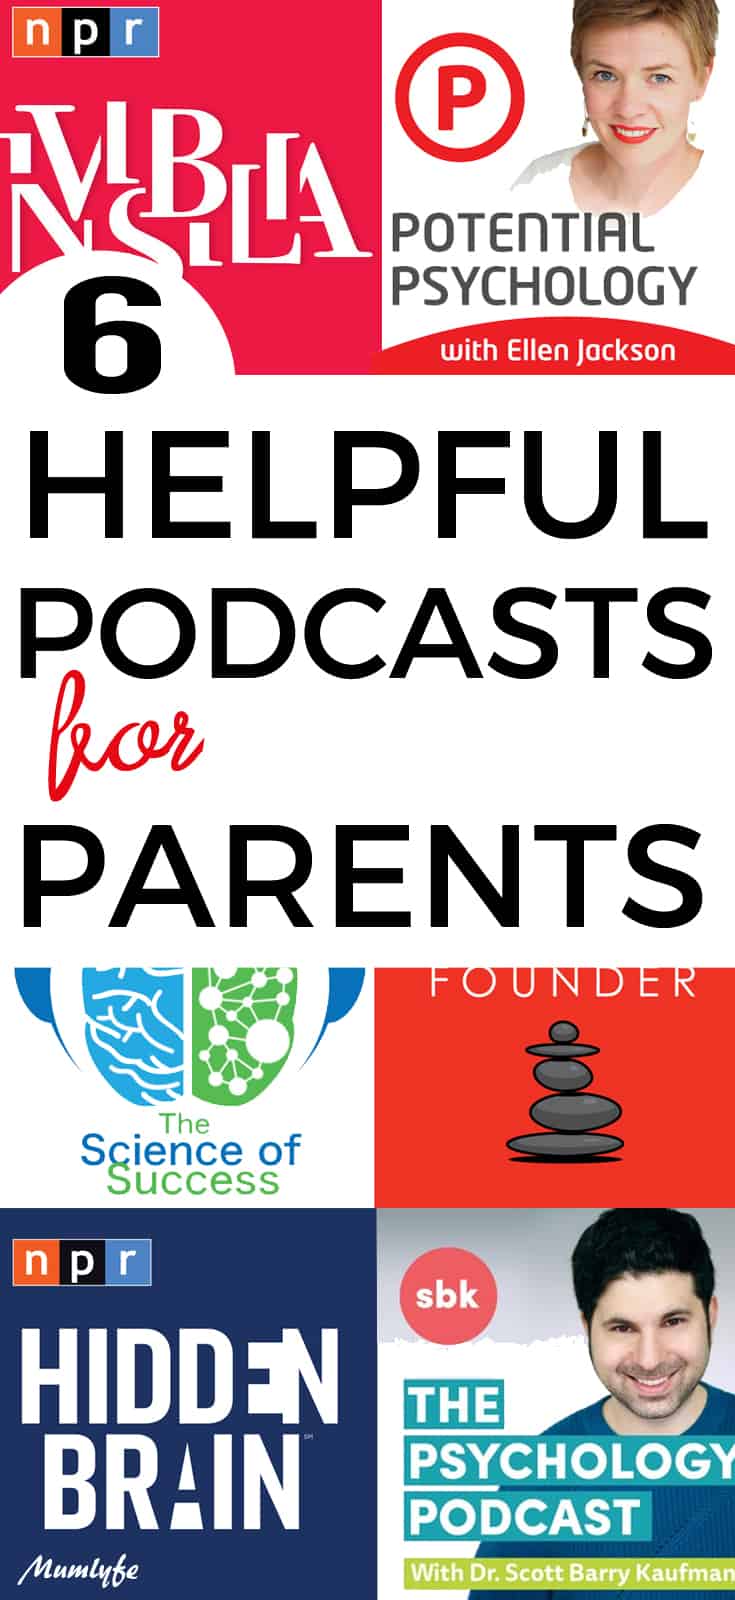 Psychology podcasts for parents